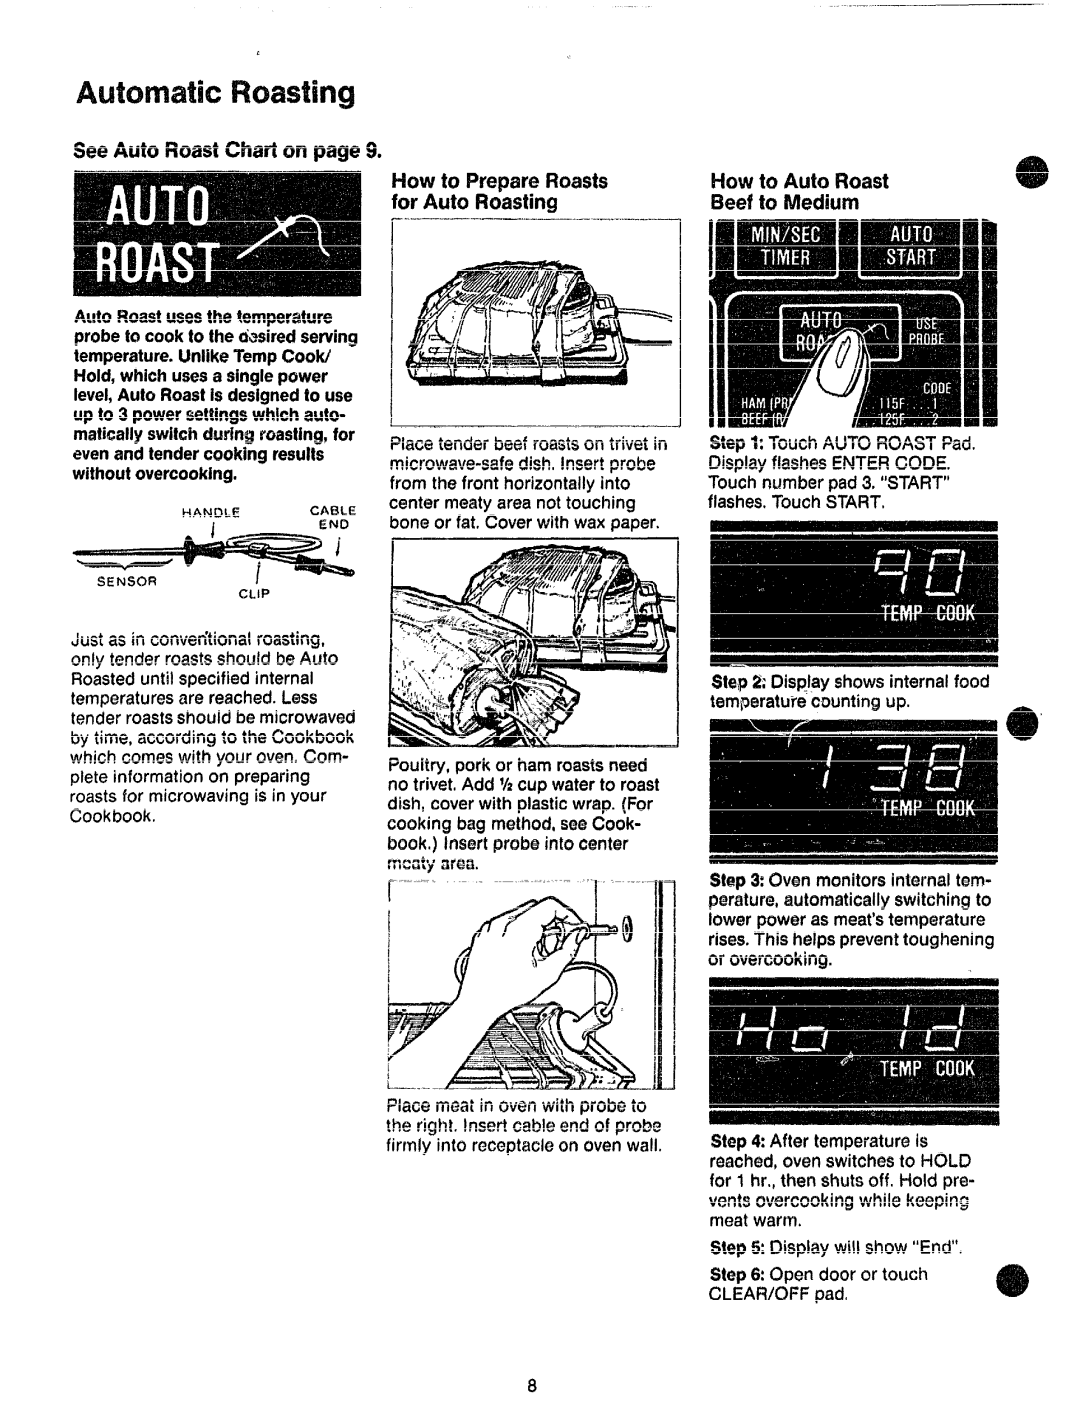 GE JVM61 manual How to PrepareFh3sts, forAutoRoasting, blow to AutoRoast Beefto Medium, SW AukIFkxMMarton page9 